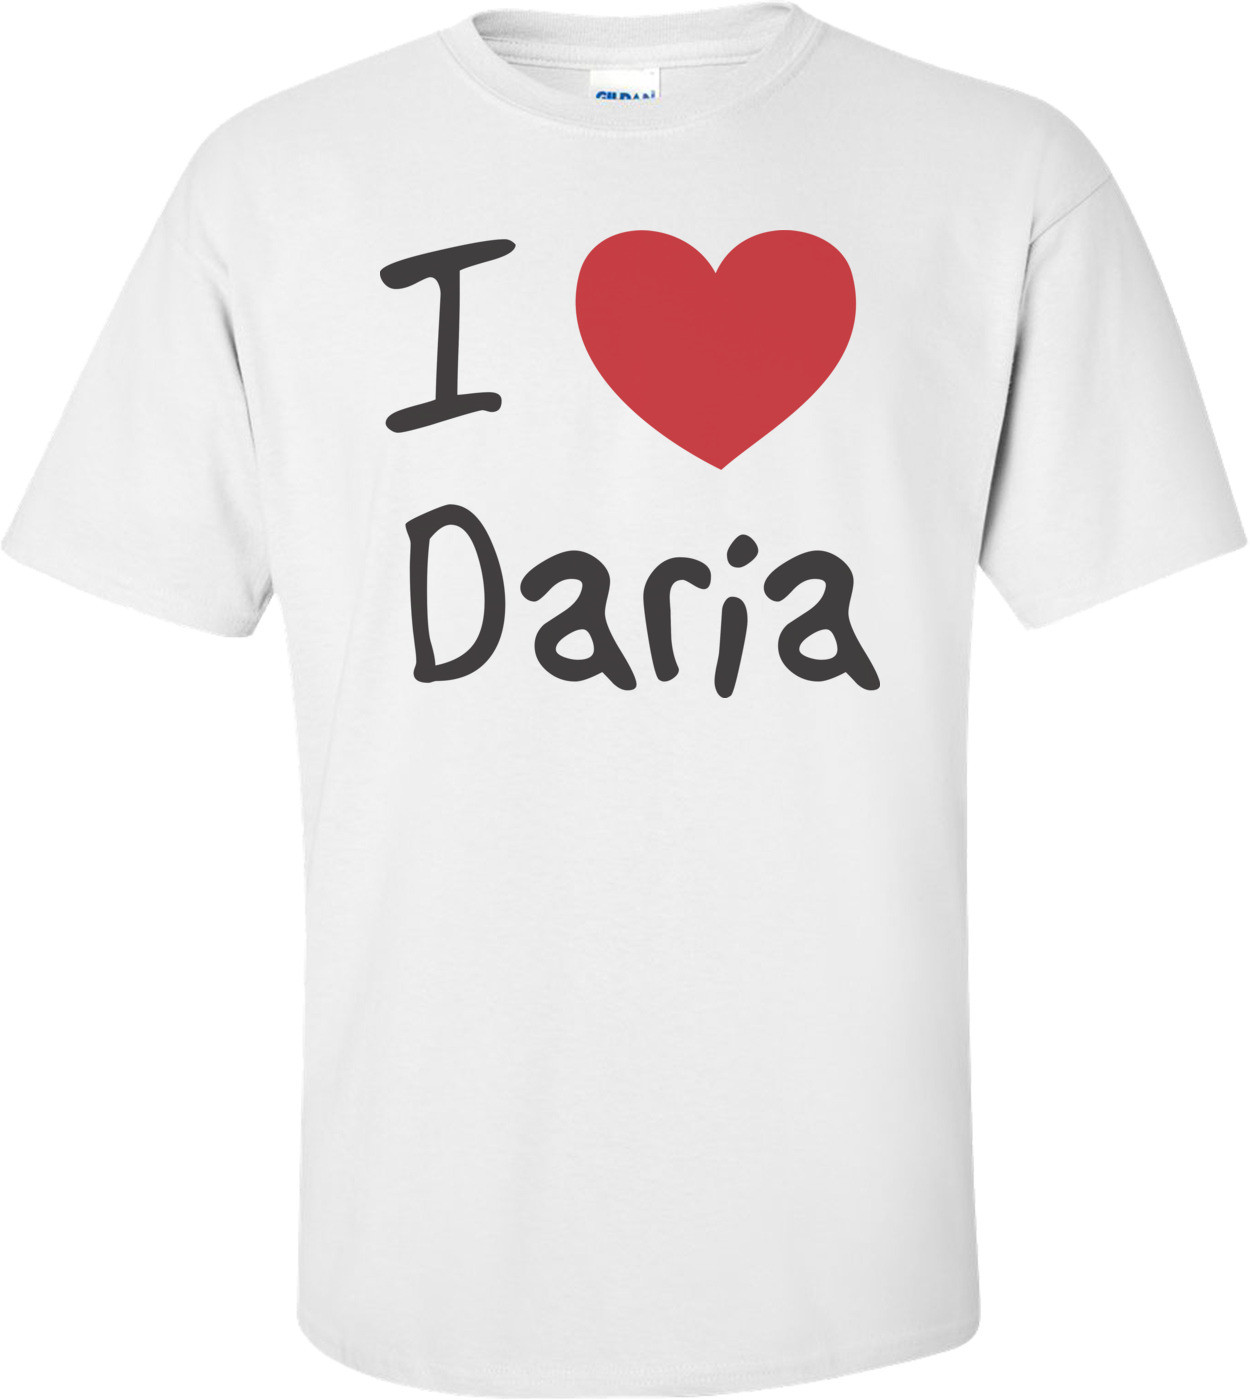 I Love Daria T-shirt